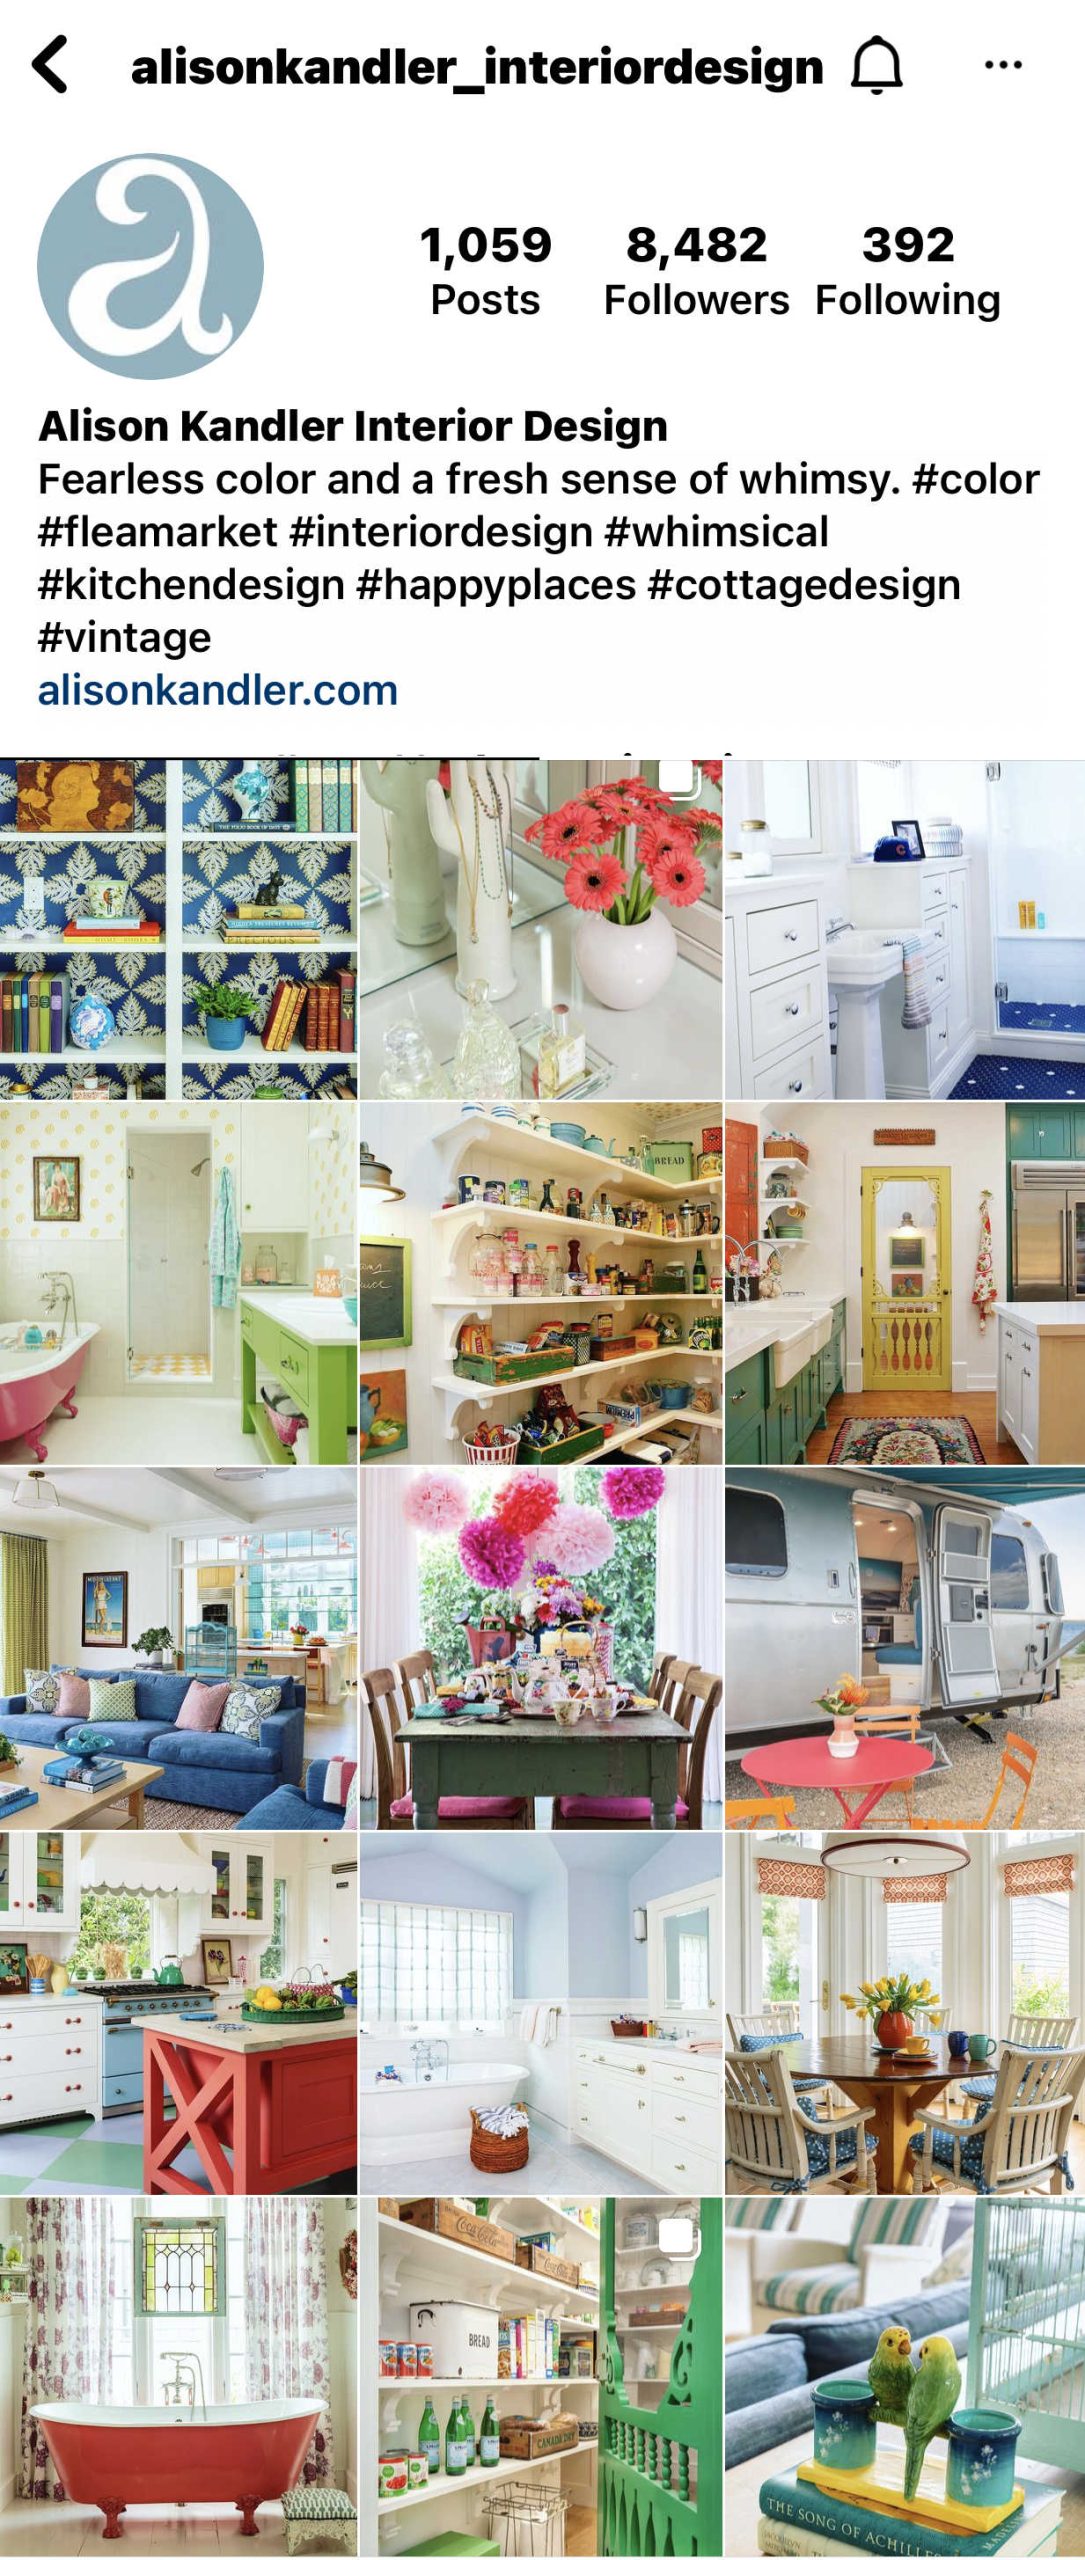 home decor inspiration - favorite instagram accounts - Alison Kandler Interior Design